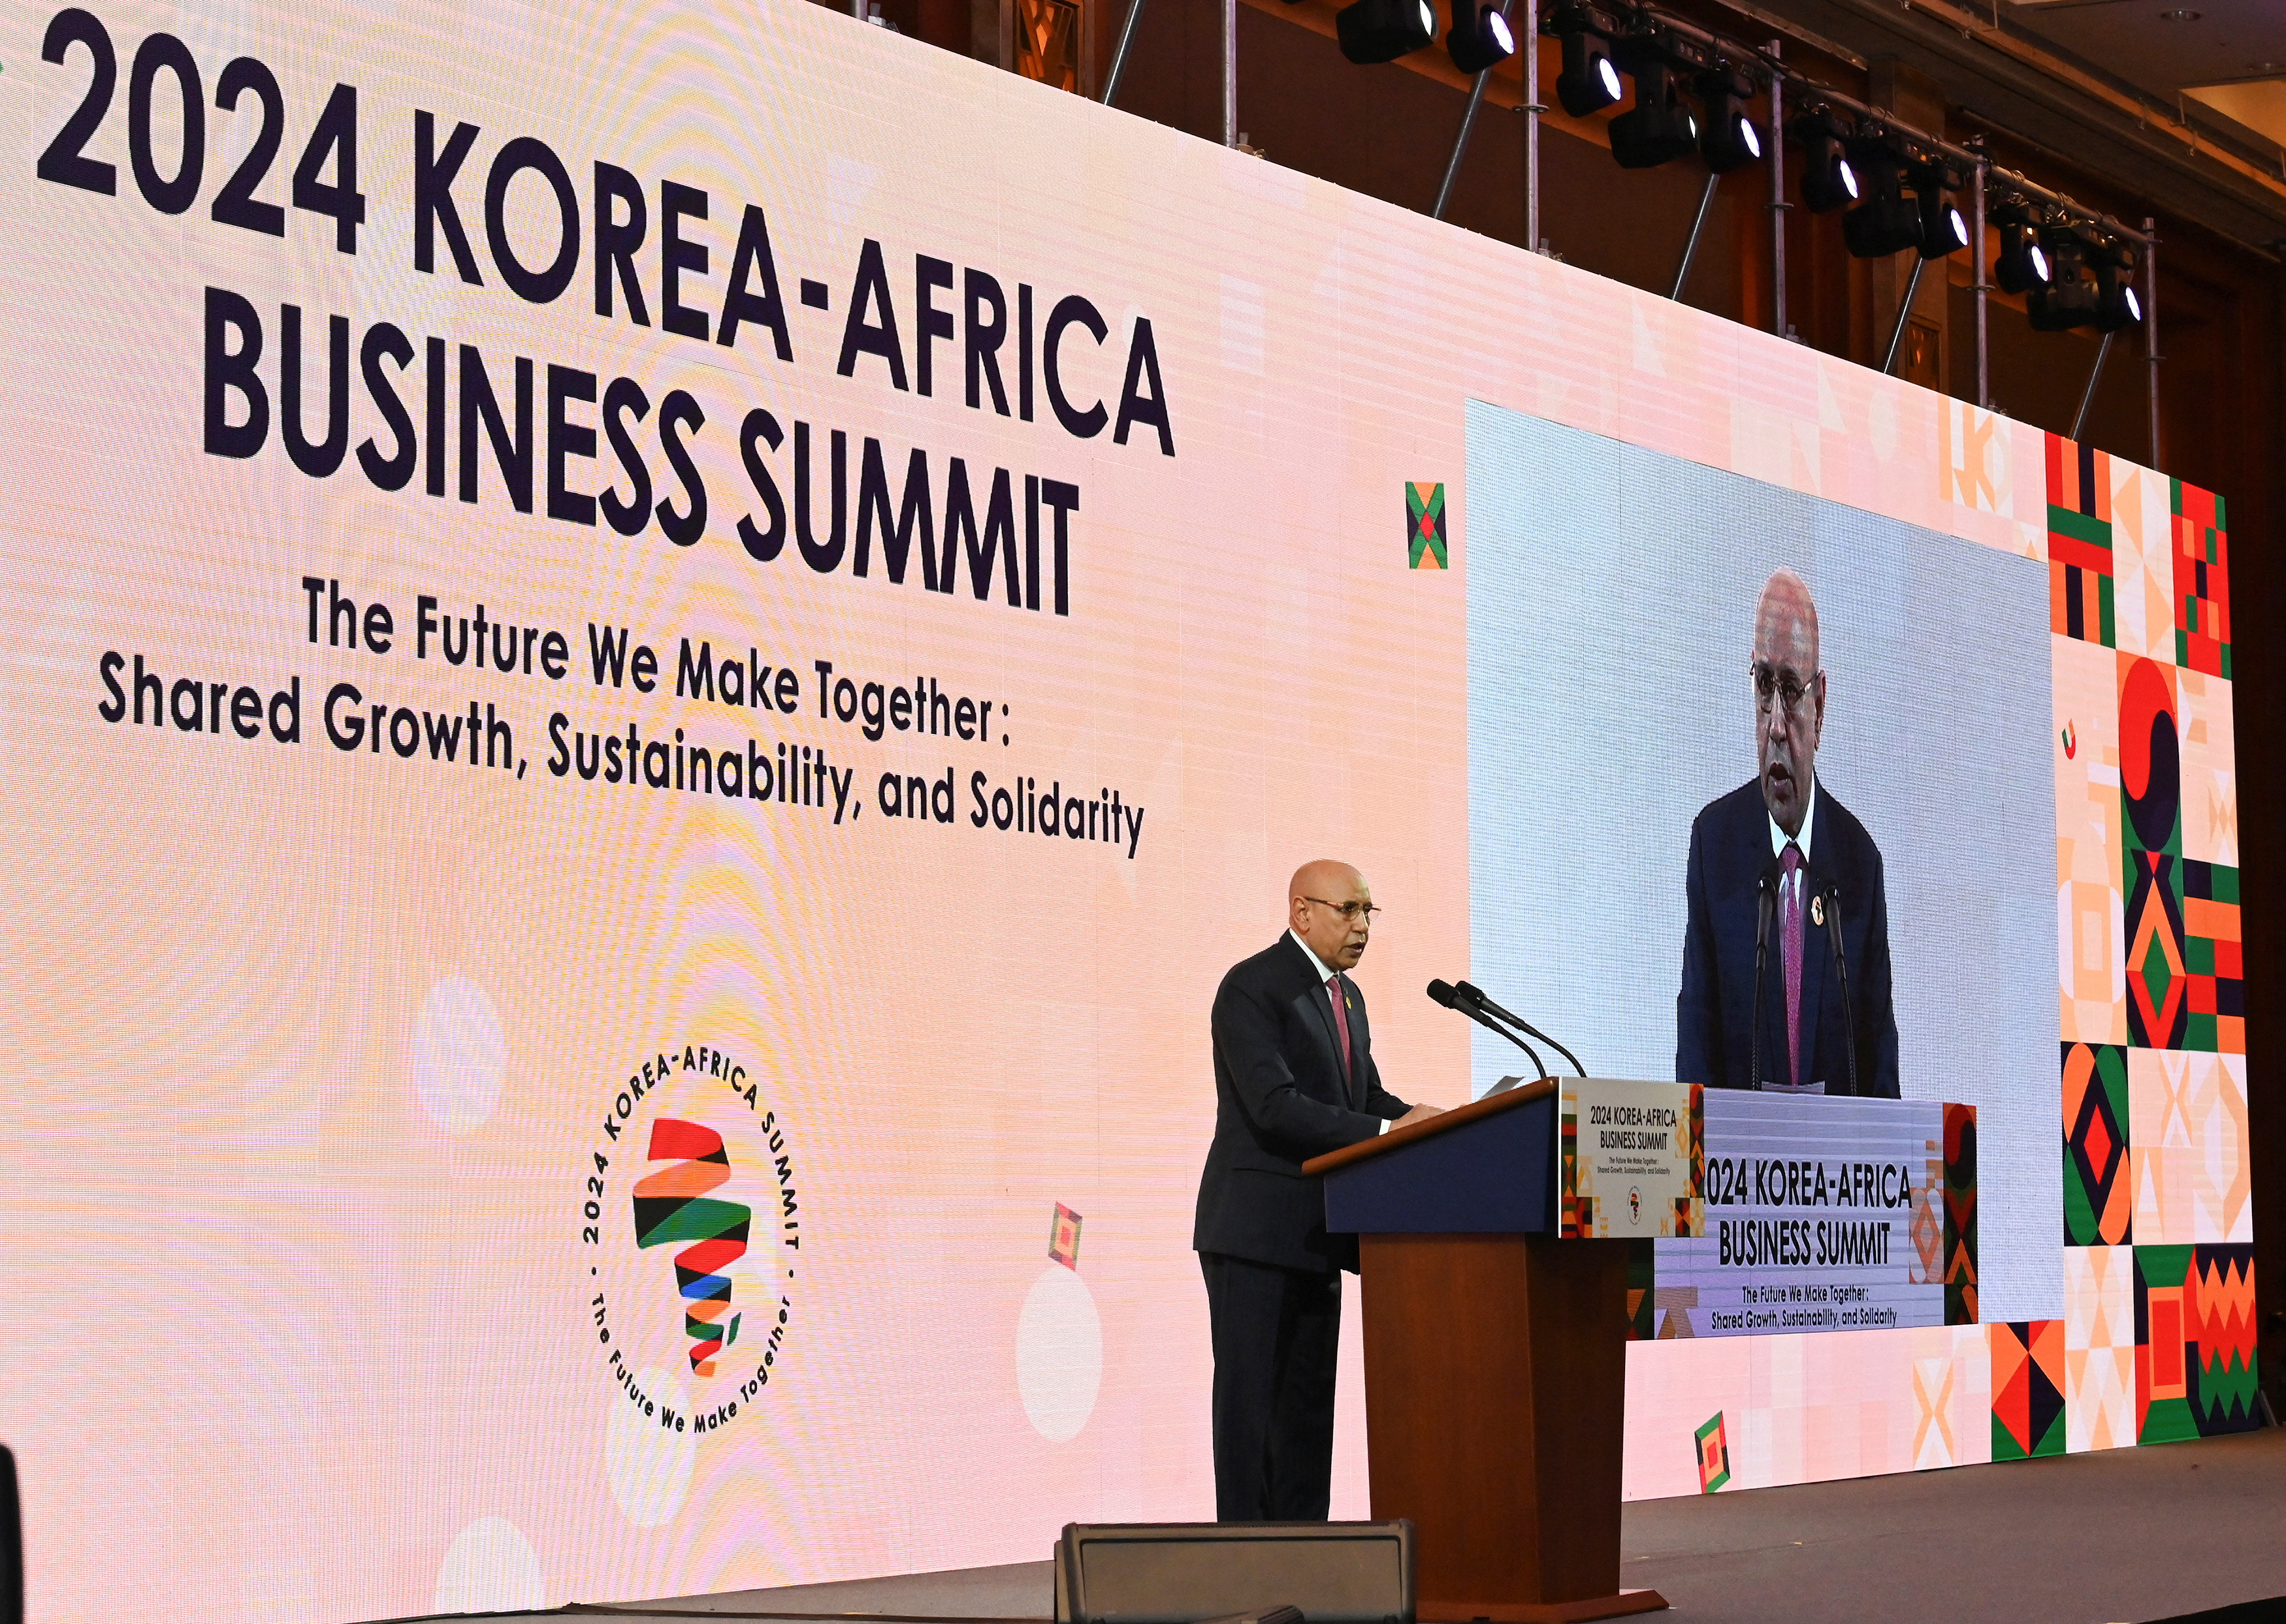 2024 Korea-Africa Business Summit